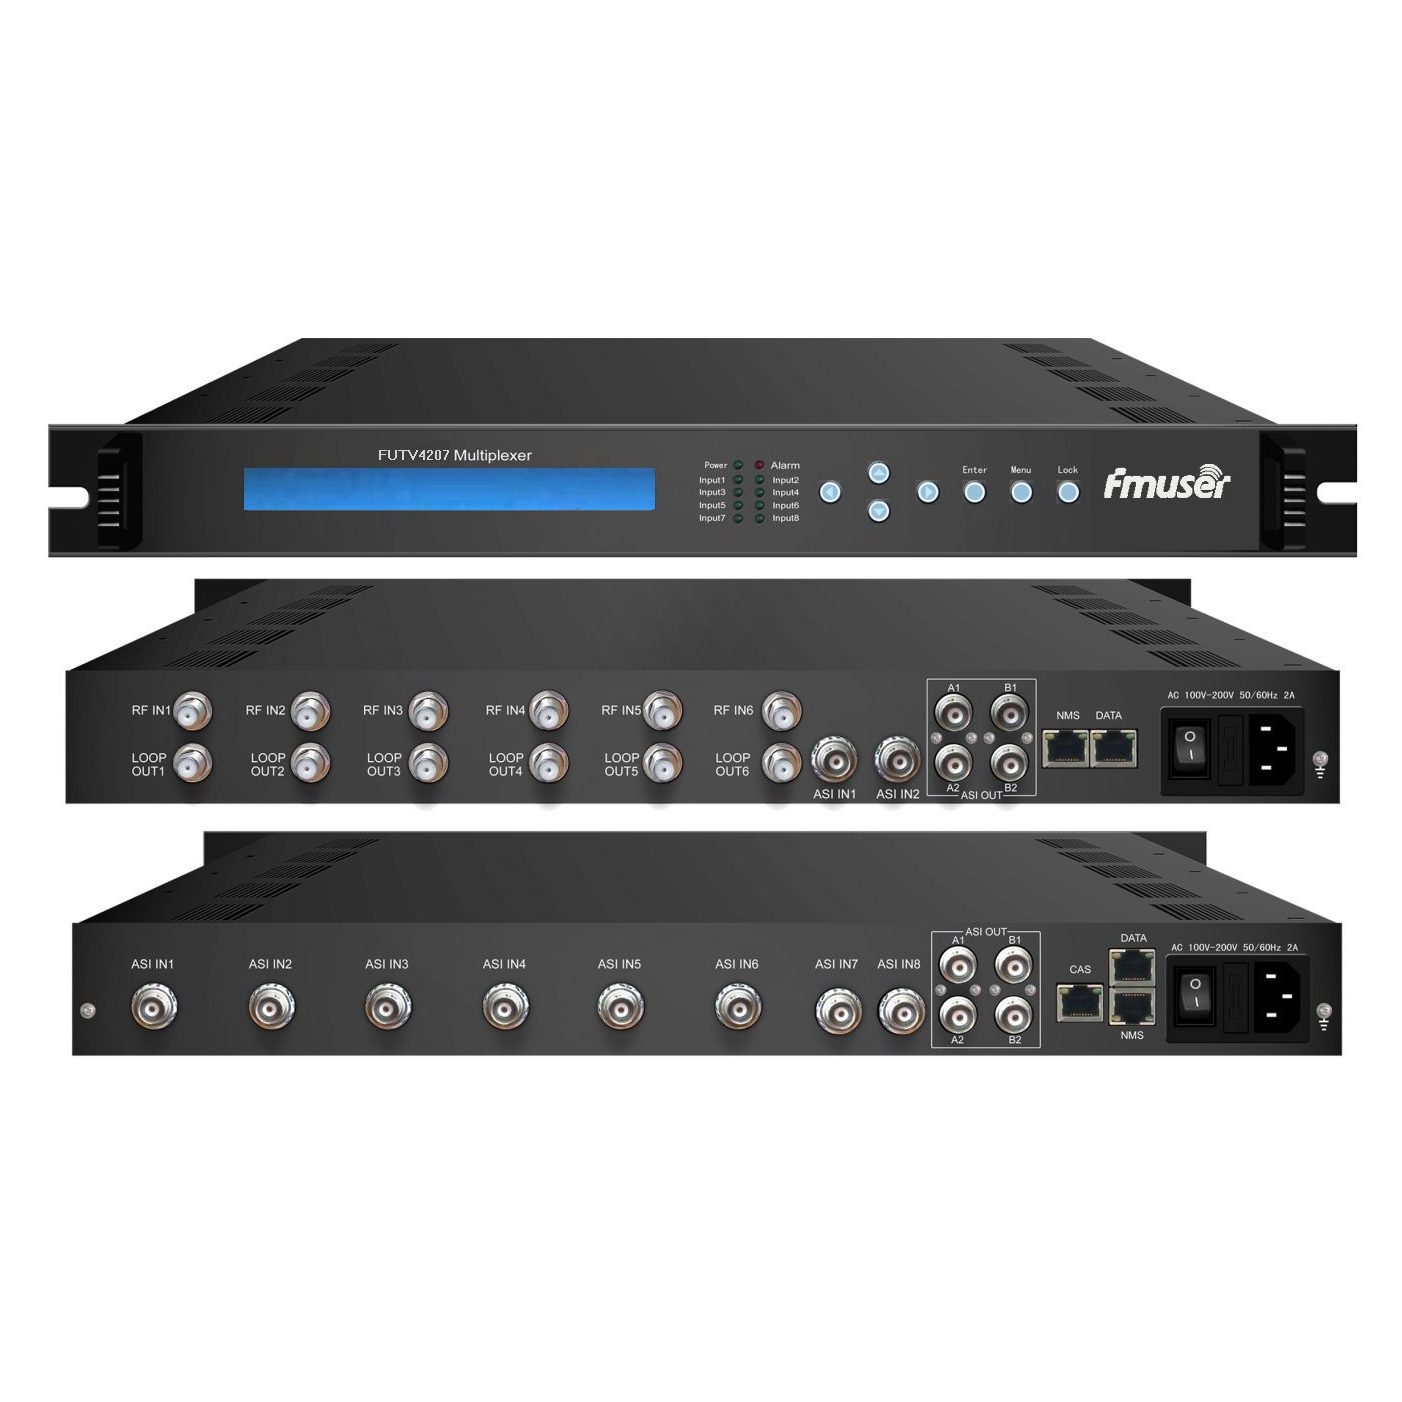 FMUSER FUTV4207X series 6 Tuner IRD(2 ASI+6 DVB-C/DVB-S/DVB-S2/DVB-T/ISDB/ATSC 8VSB RF Input,8 ASI In,2 ASI IP Output) Multiplexer